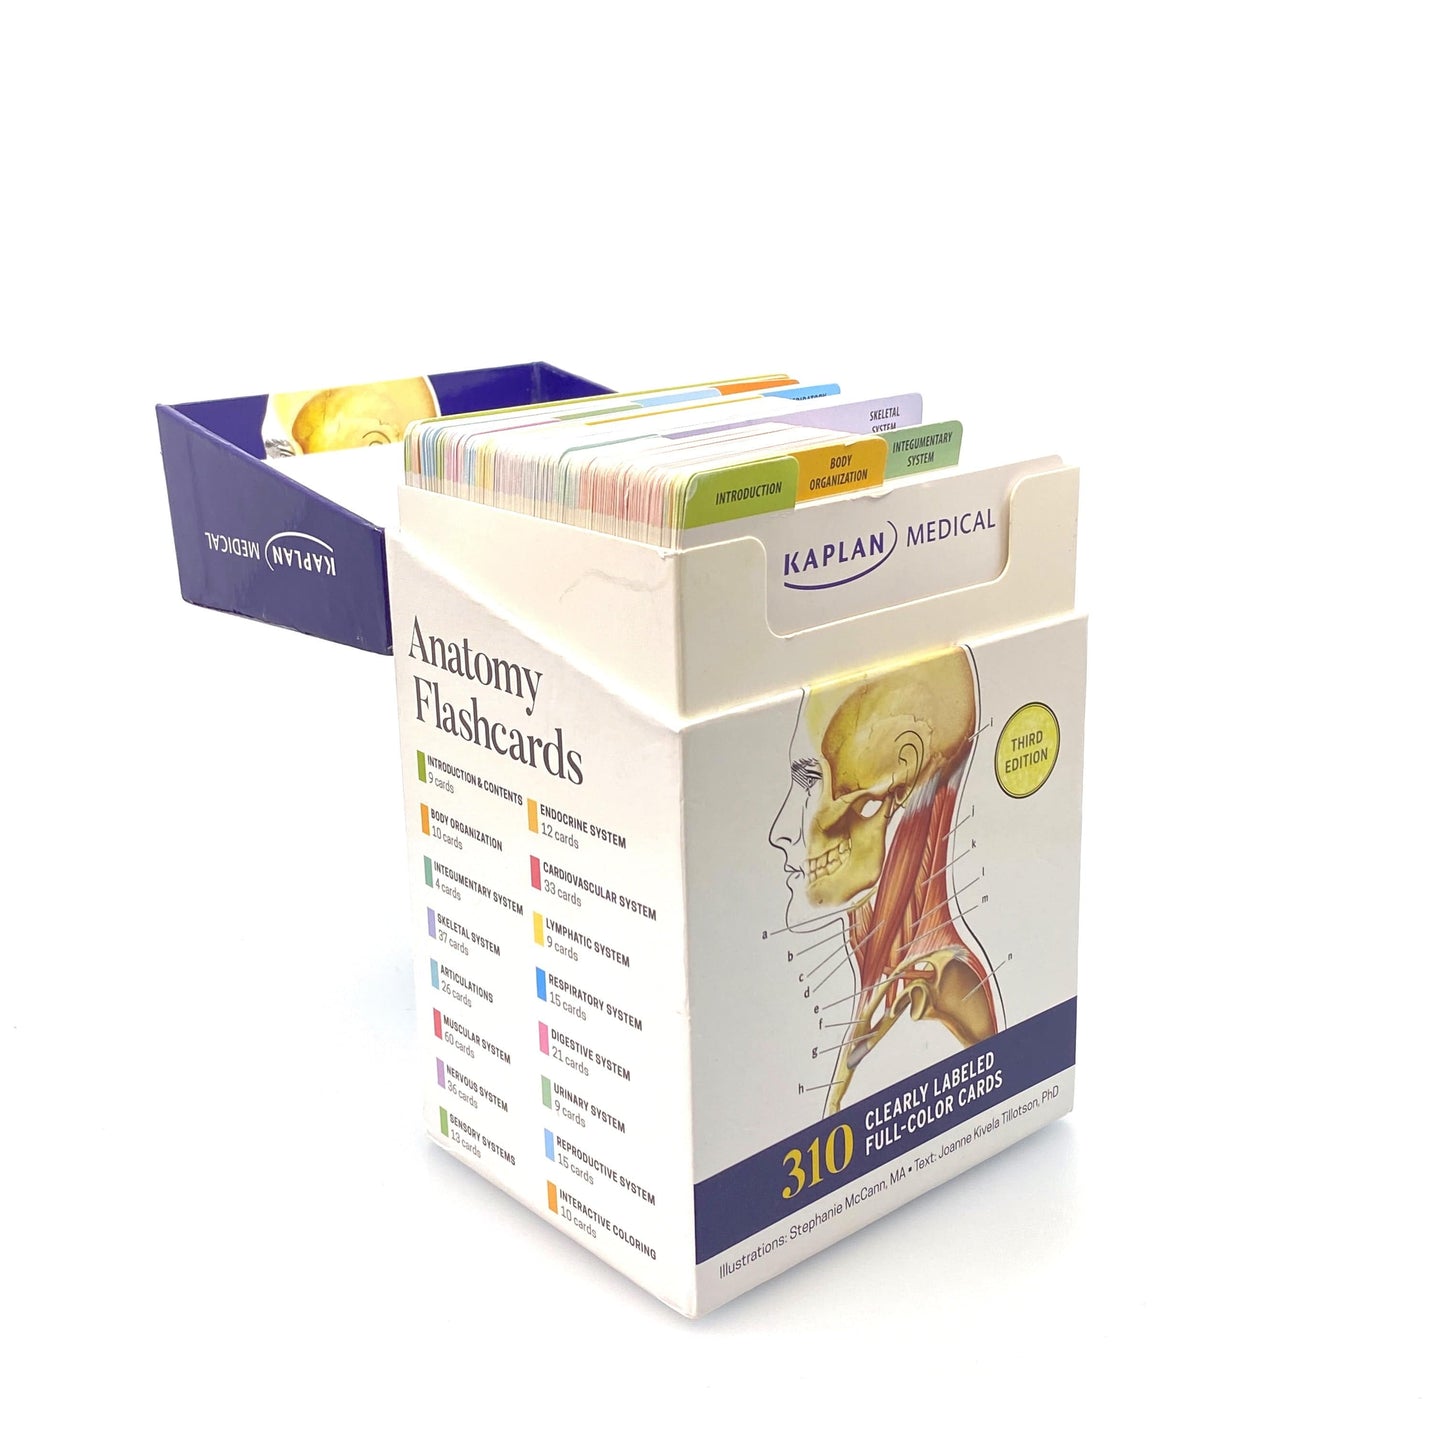 Kaplan Medical Anatomy Flashcards Joanne Tillotson 3rd Edition